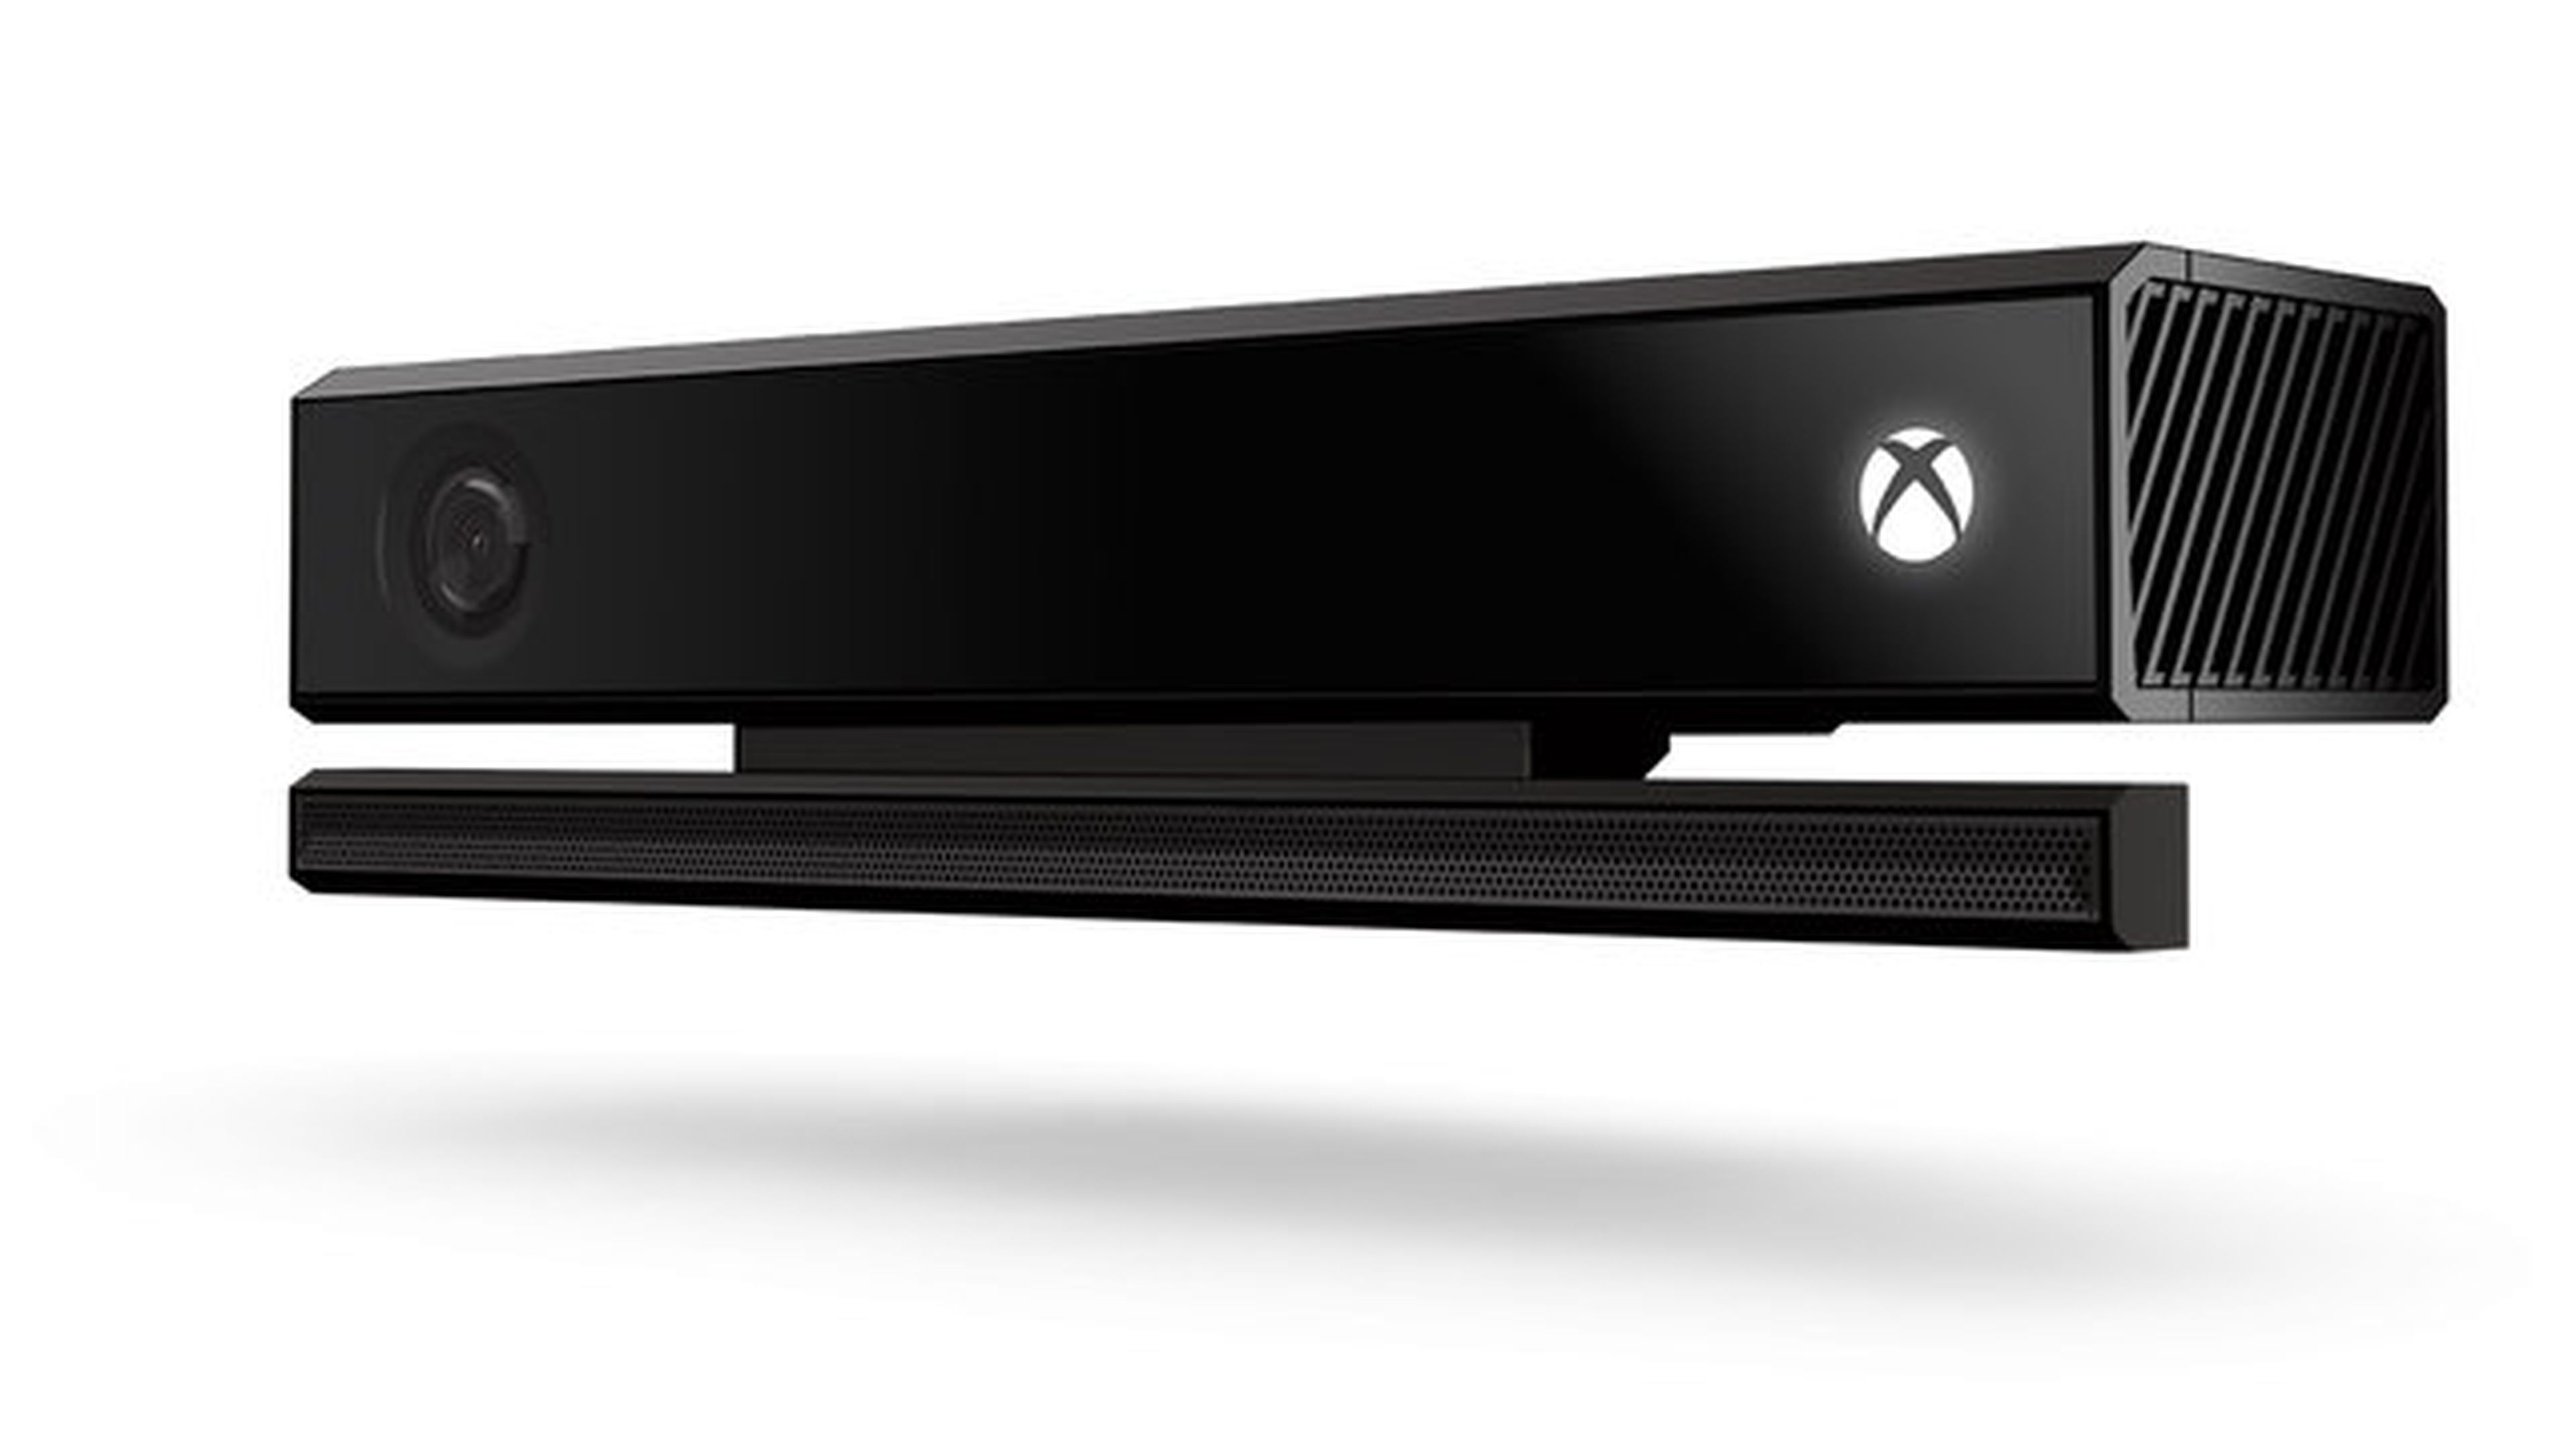 Xbox One: Ryse, primer juego de Kinect